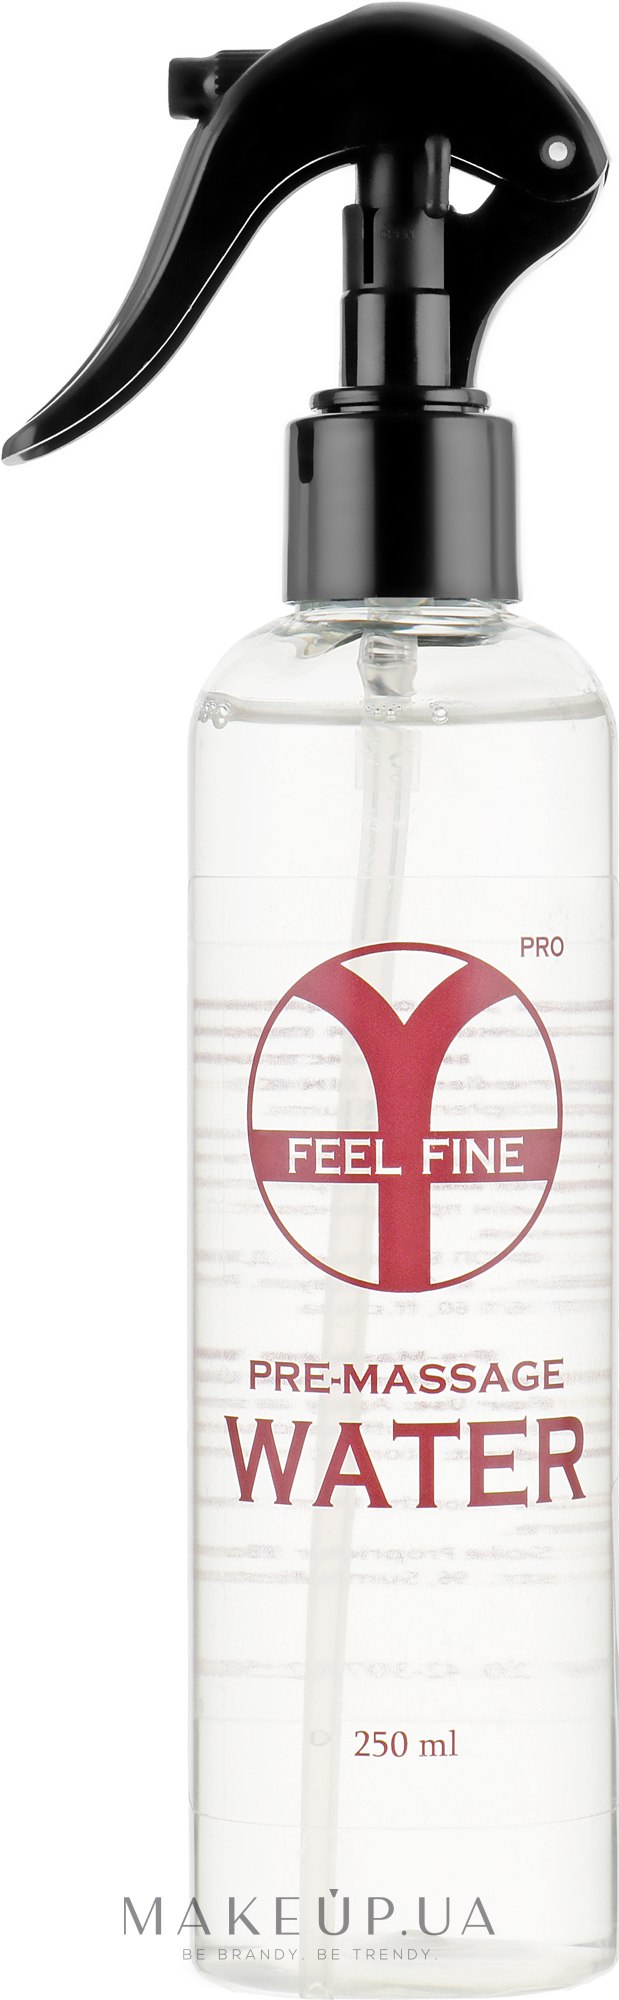 Очищающая вода перед массажем - Feel Fine Pro Pre-Massage Water — фото 250ml